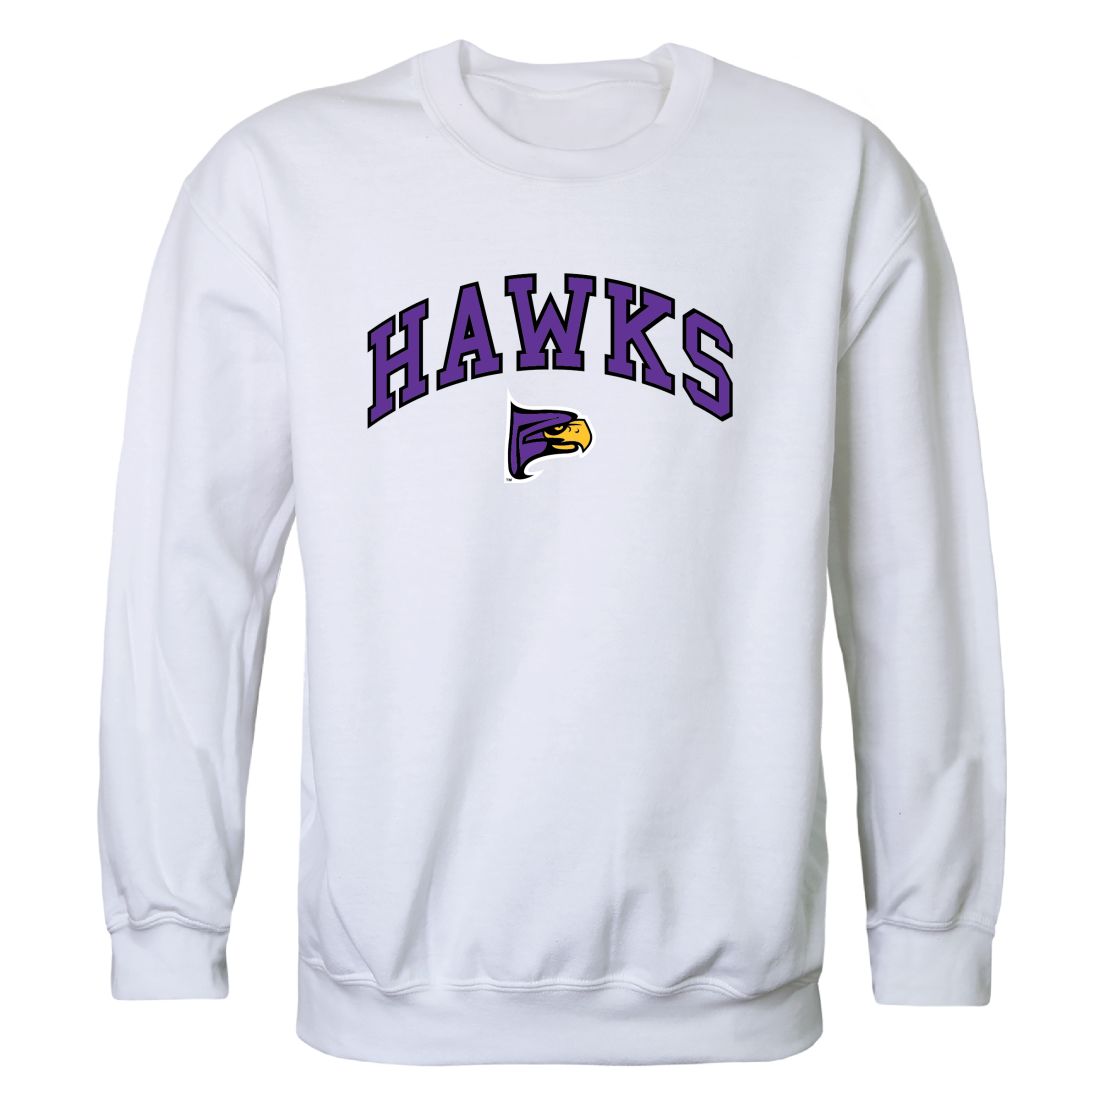 Hunter College Hawks Campus Crewneck Sweatshirt